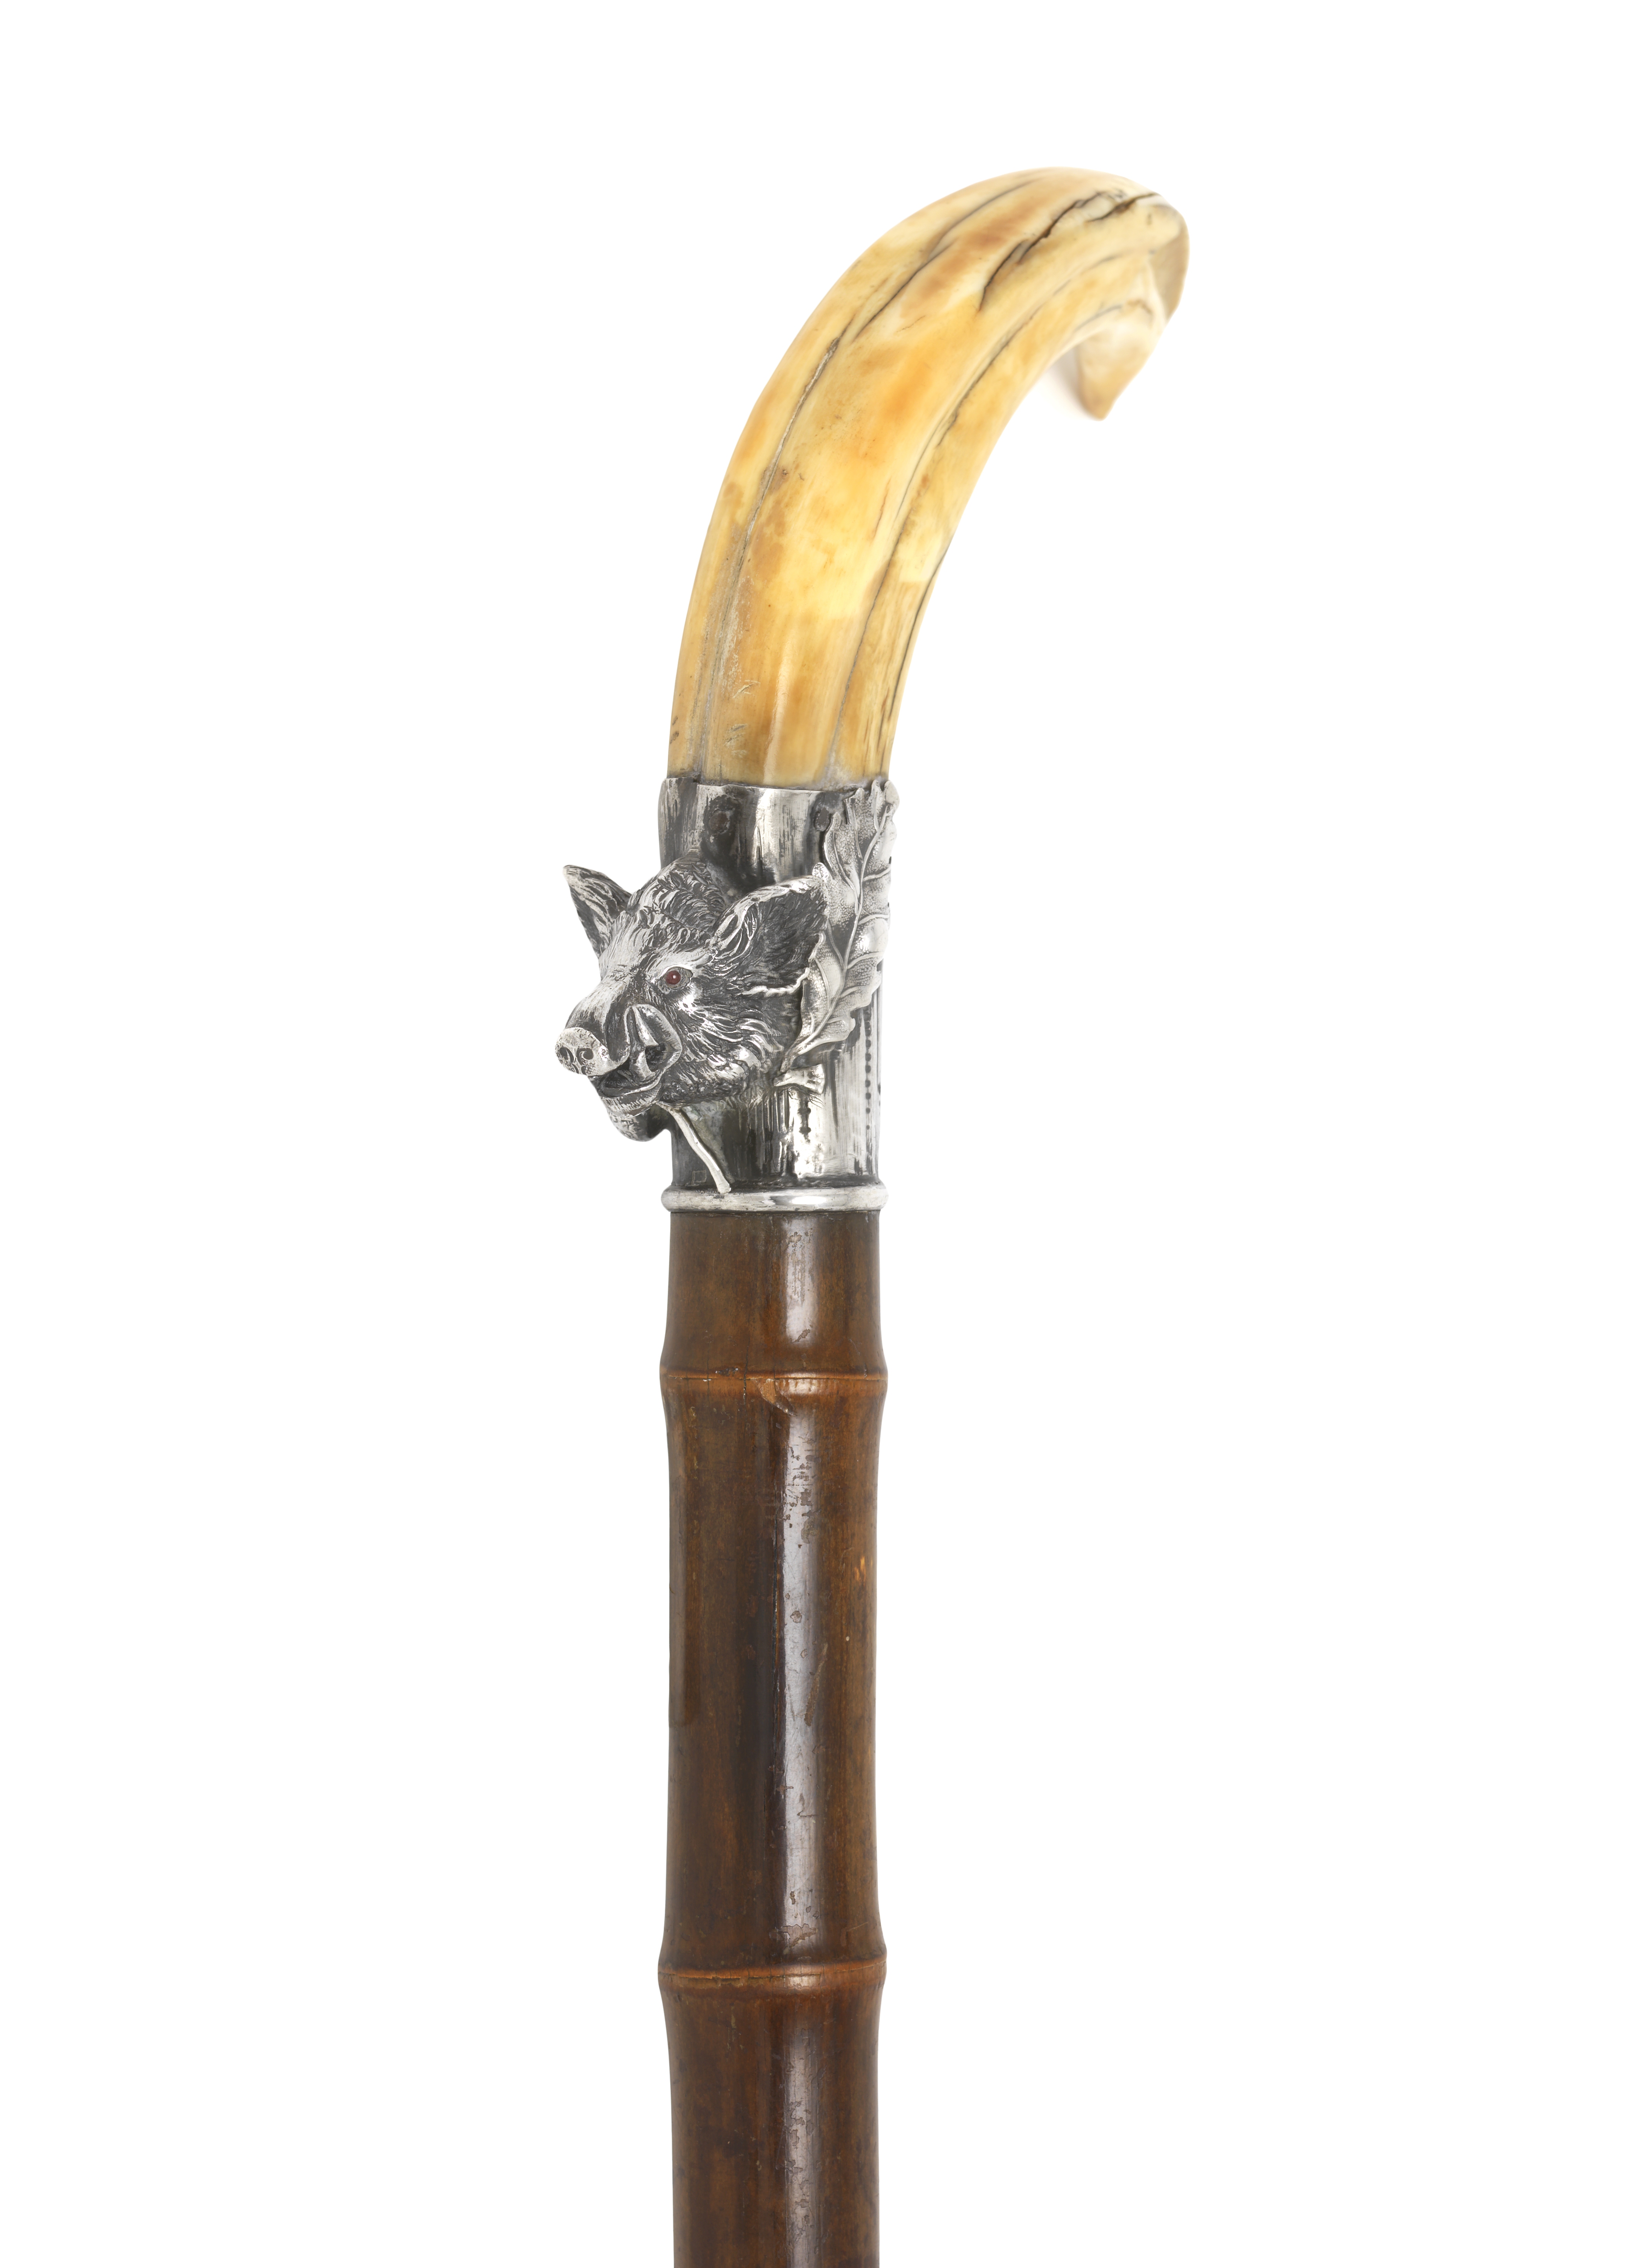 An Austrian silver-mounted boar's tusk walking cane 1872 - 1922 Vienna mark - Image 2 of 2